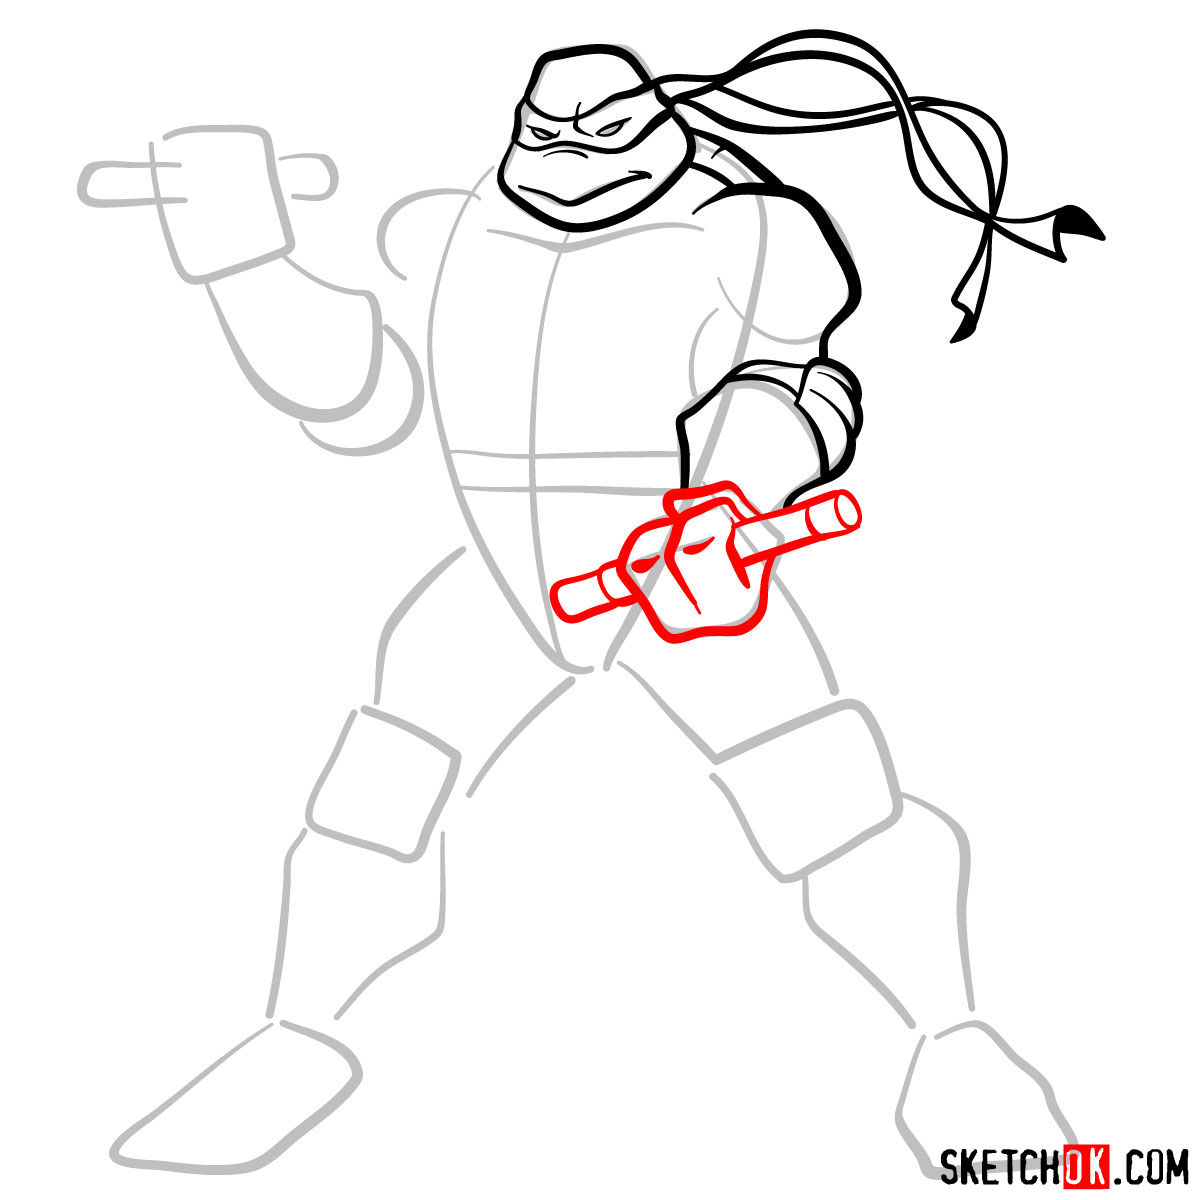 How to draw Michaelangelo ninja turtle - step 06